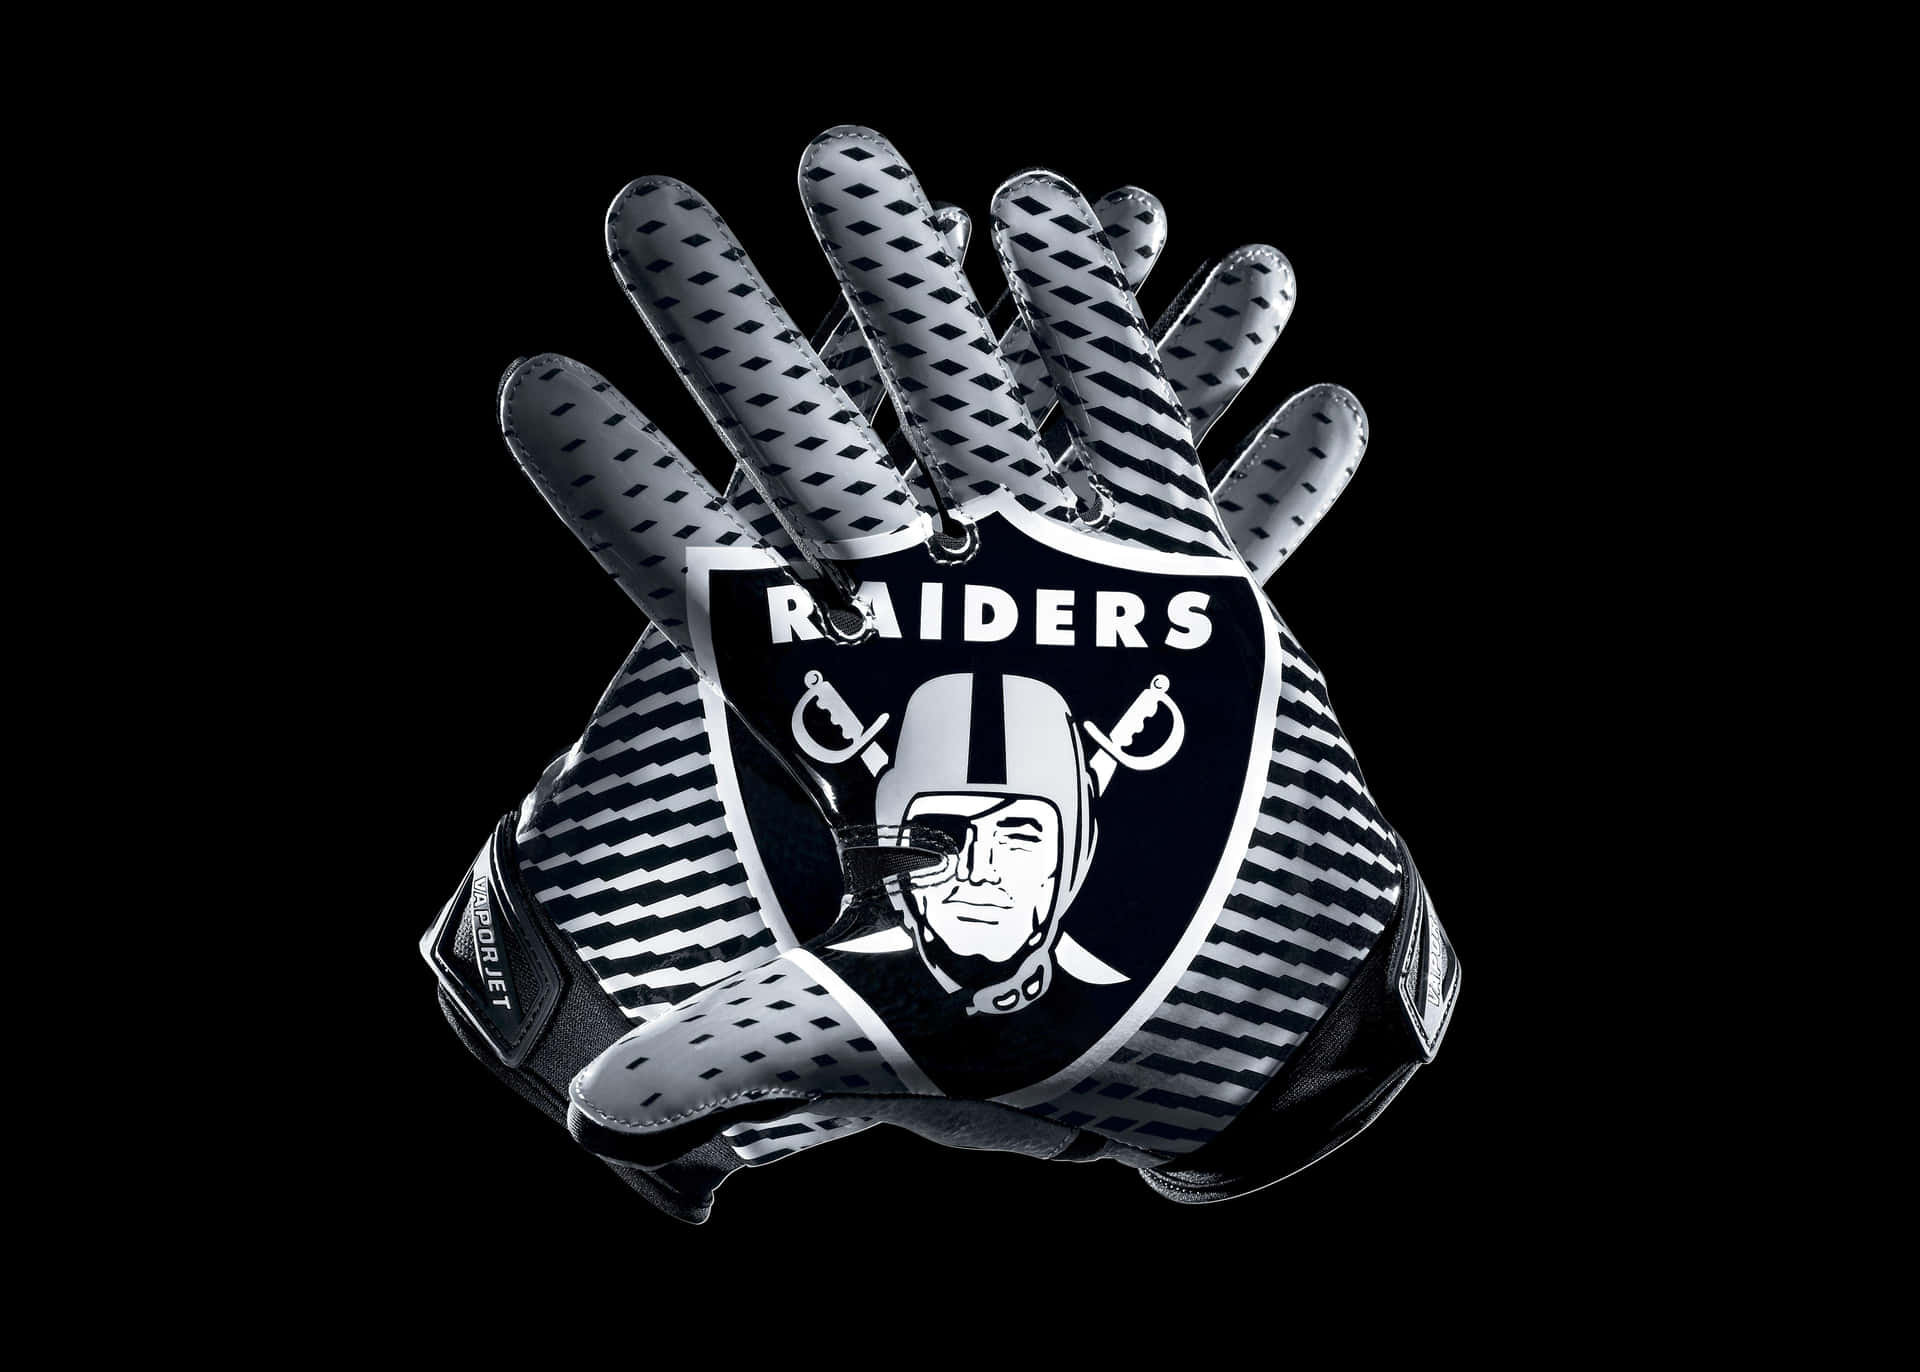 Raiders Logo On Striped Football Gloves Wallpaper